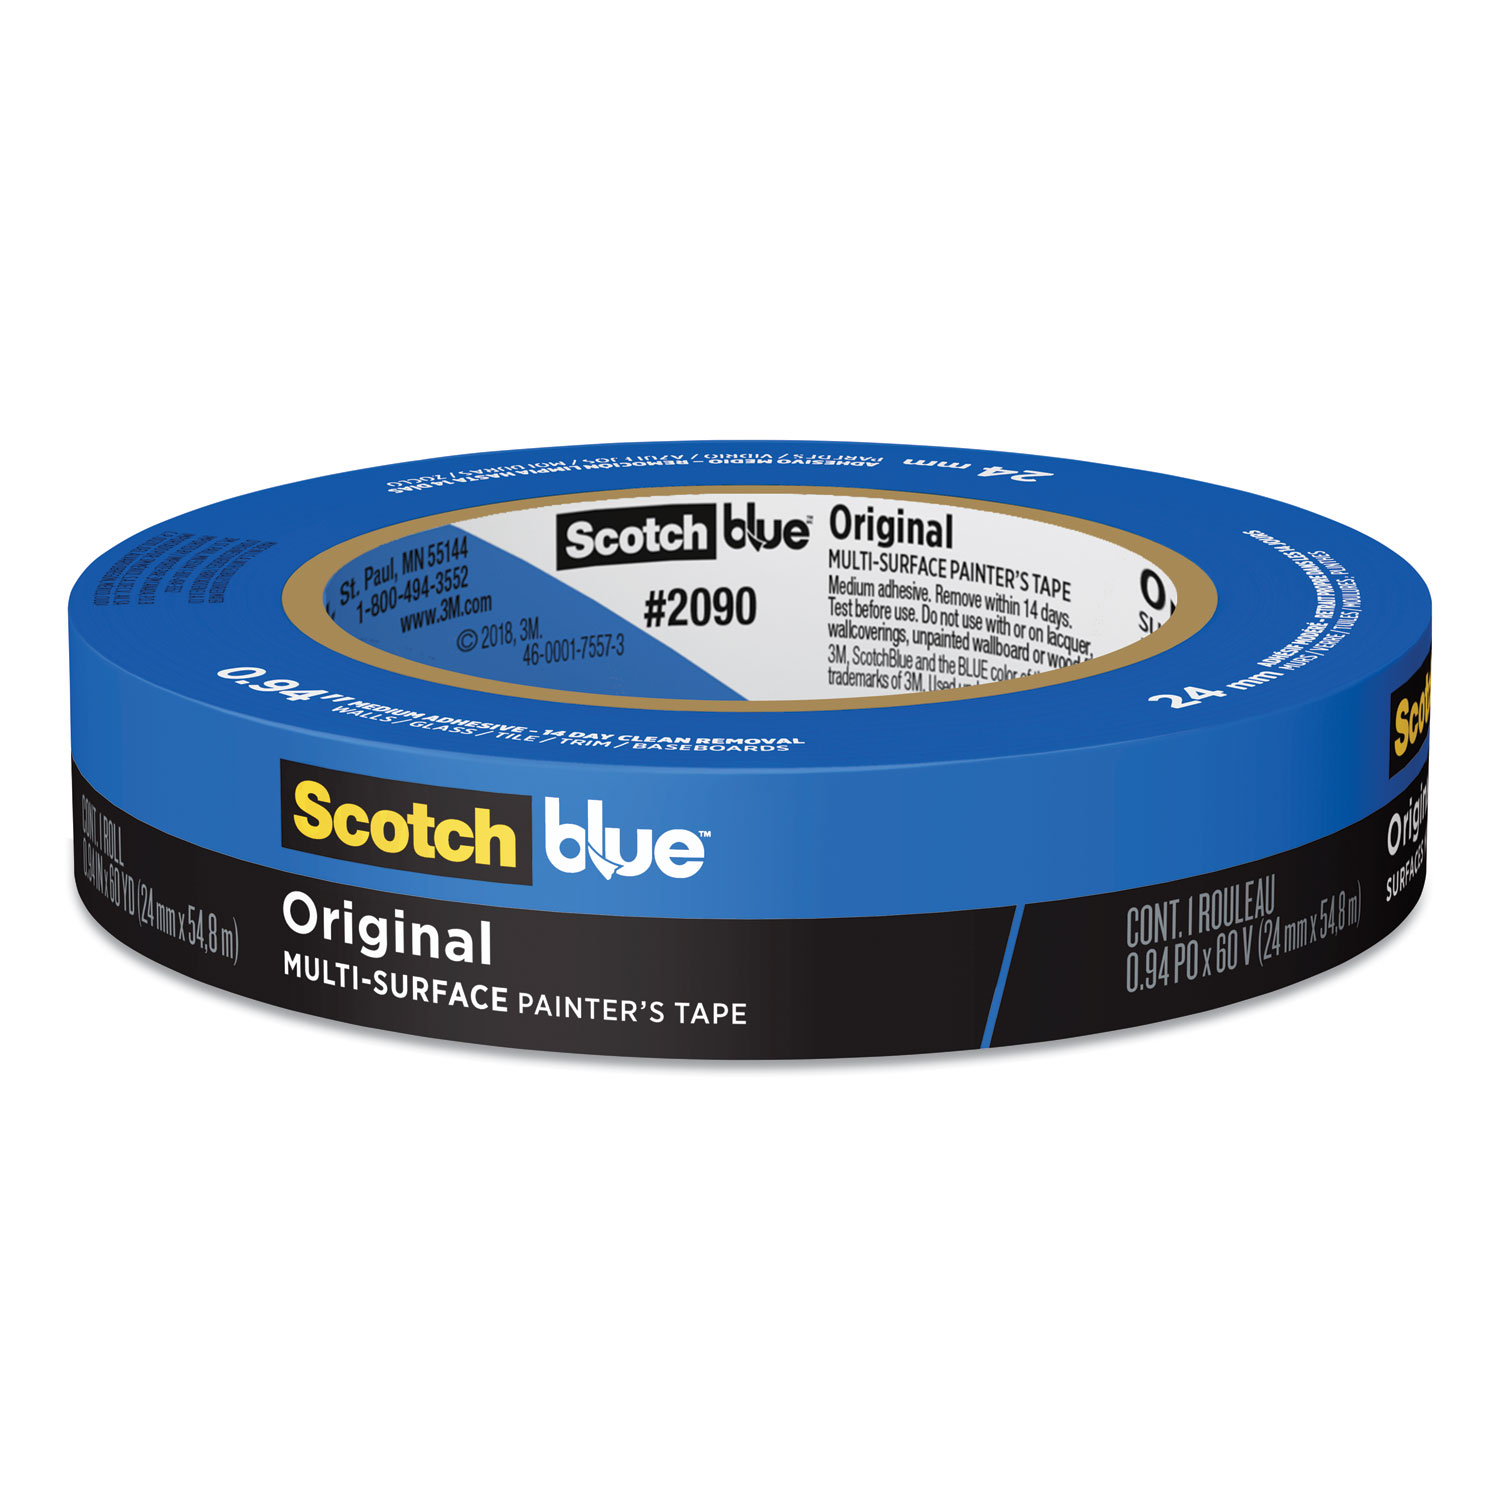  ScotchBlue 2090-24A Original Multi-Surface Painter's Tape, 3 Core, 0.94 x 60 yds, Blue (MMM209024A) 